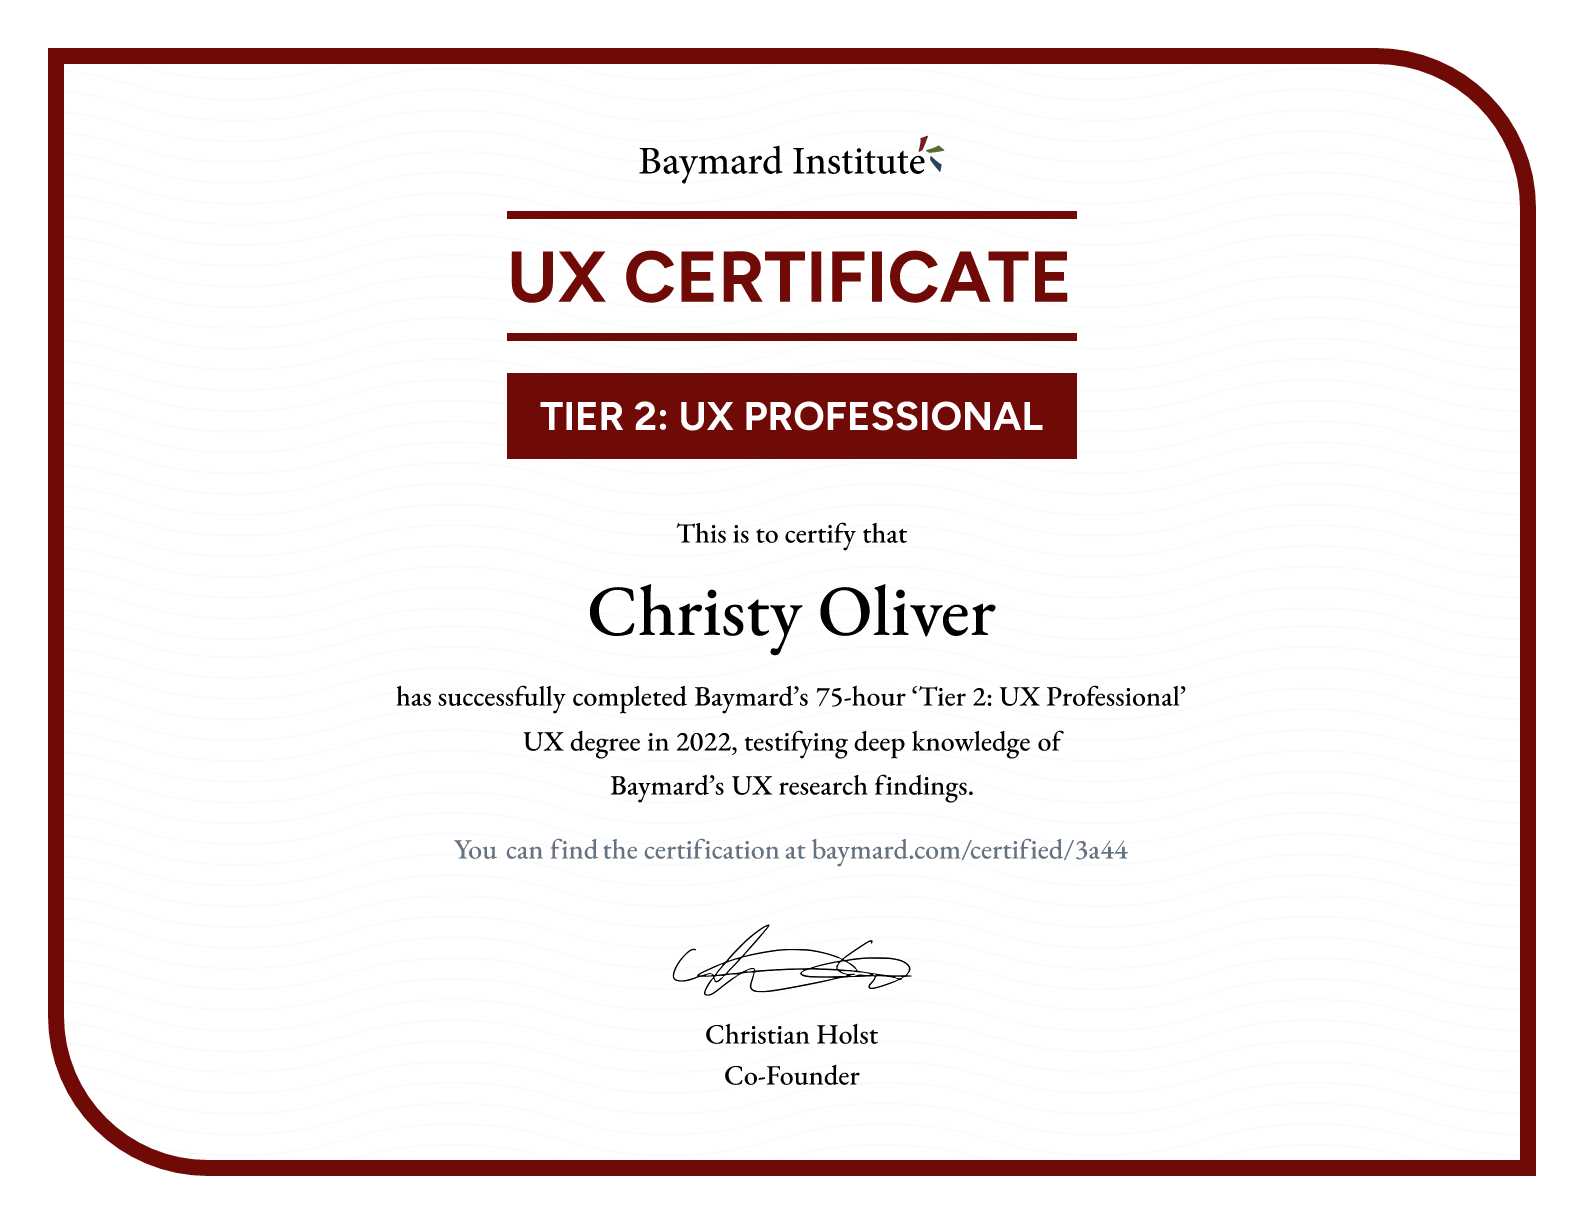 Christy Oliver’s certificate